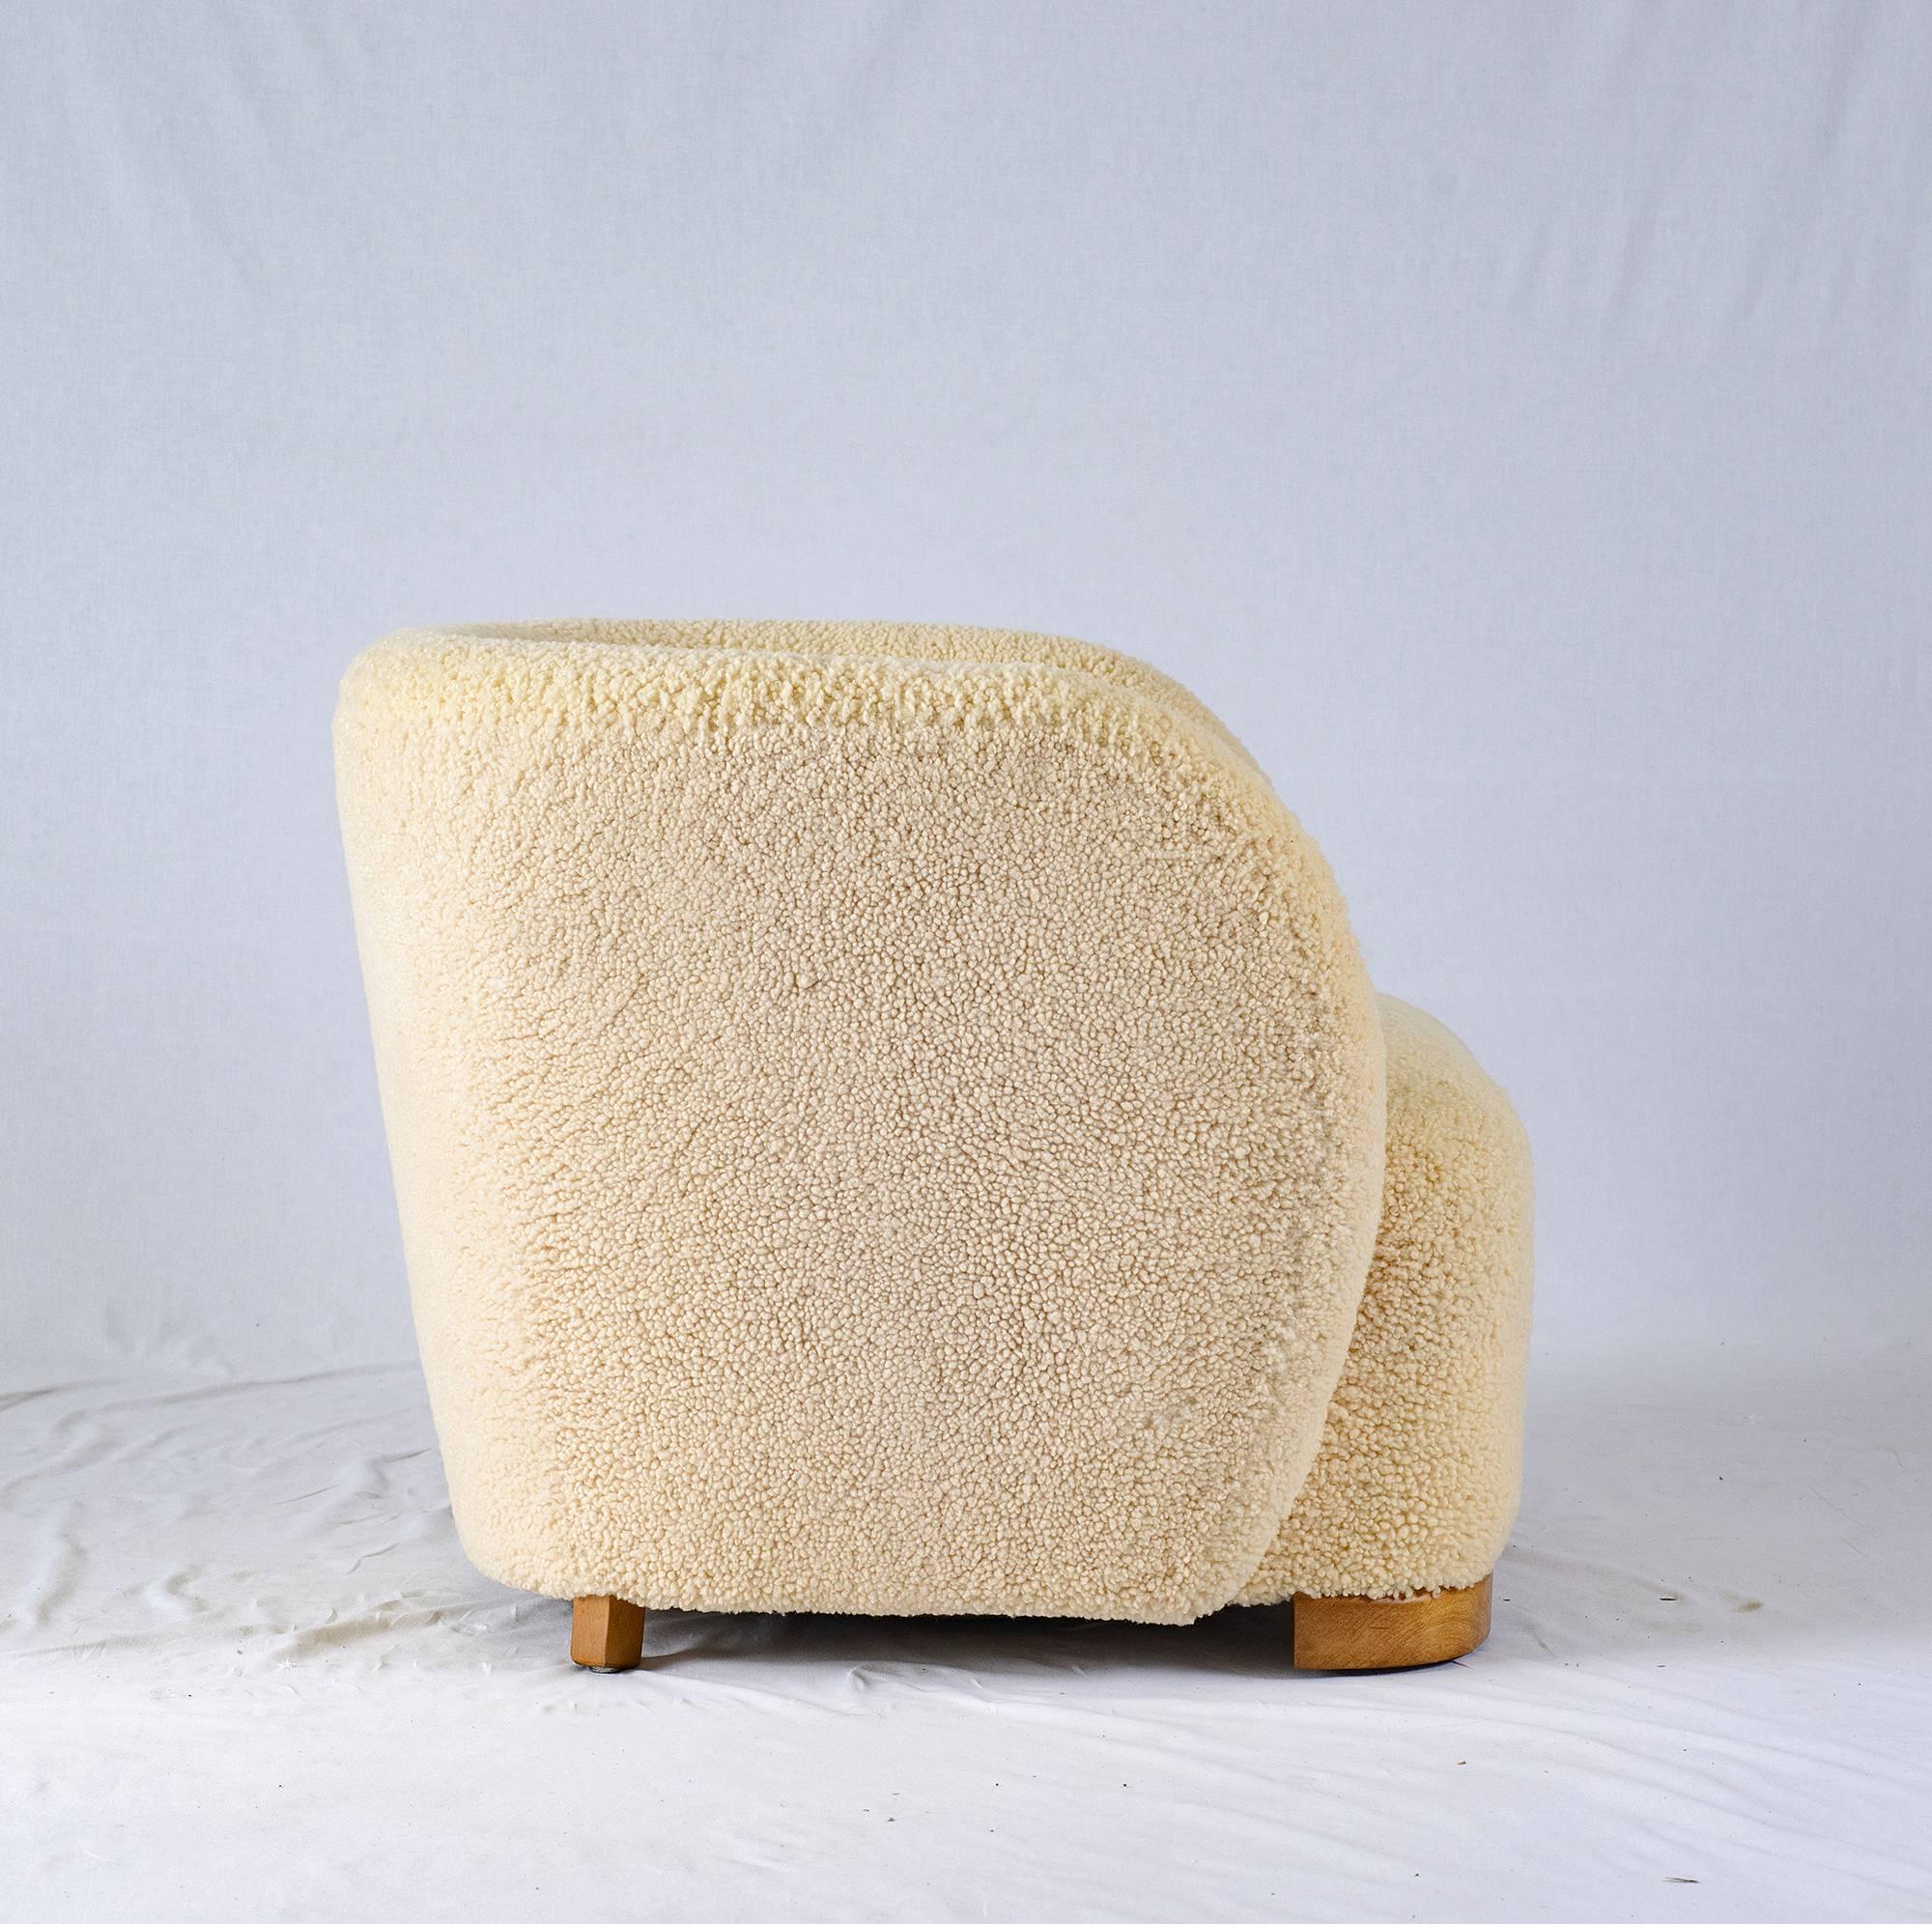 sheep skin chairs